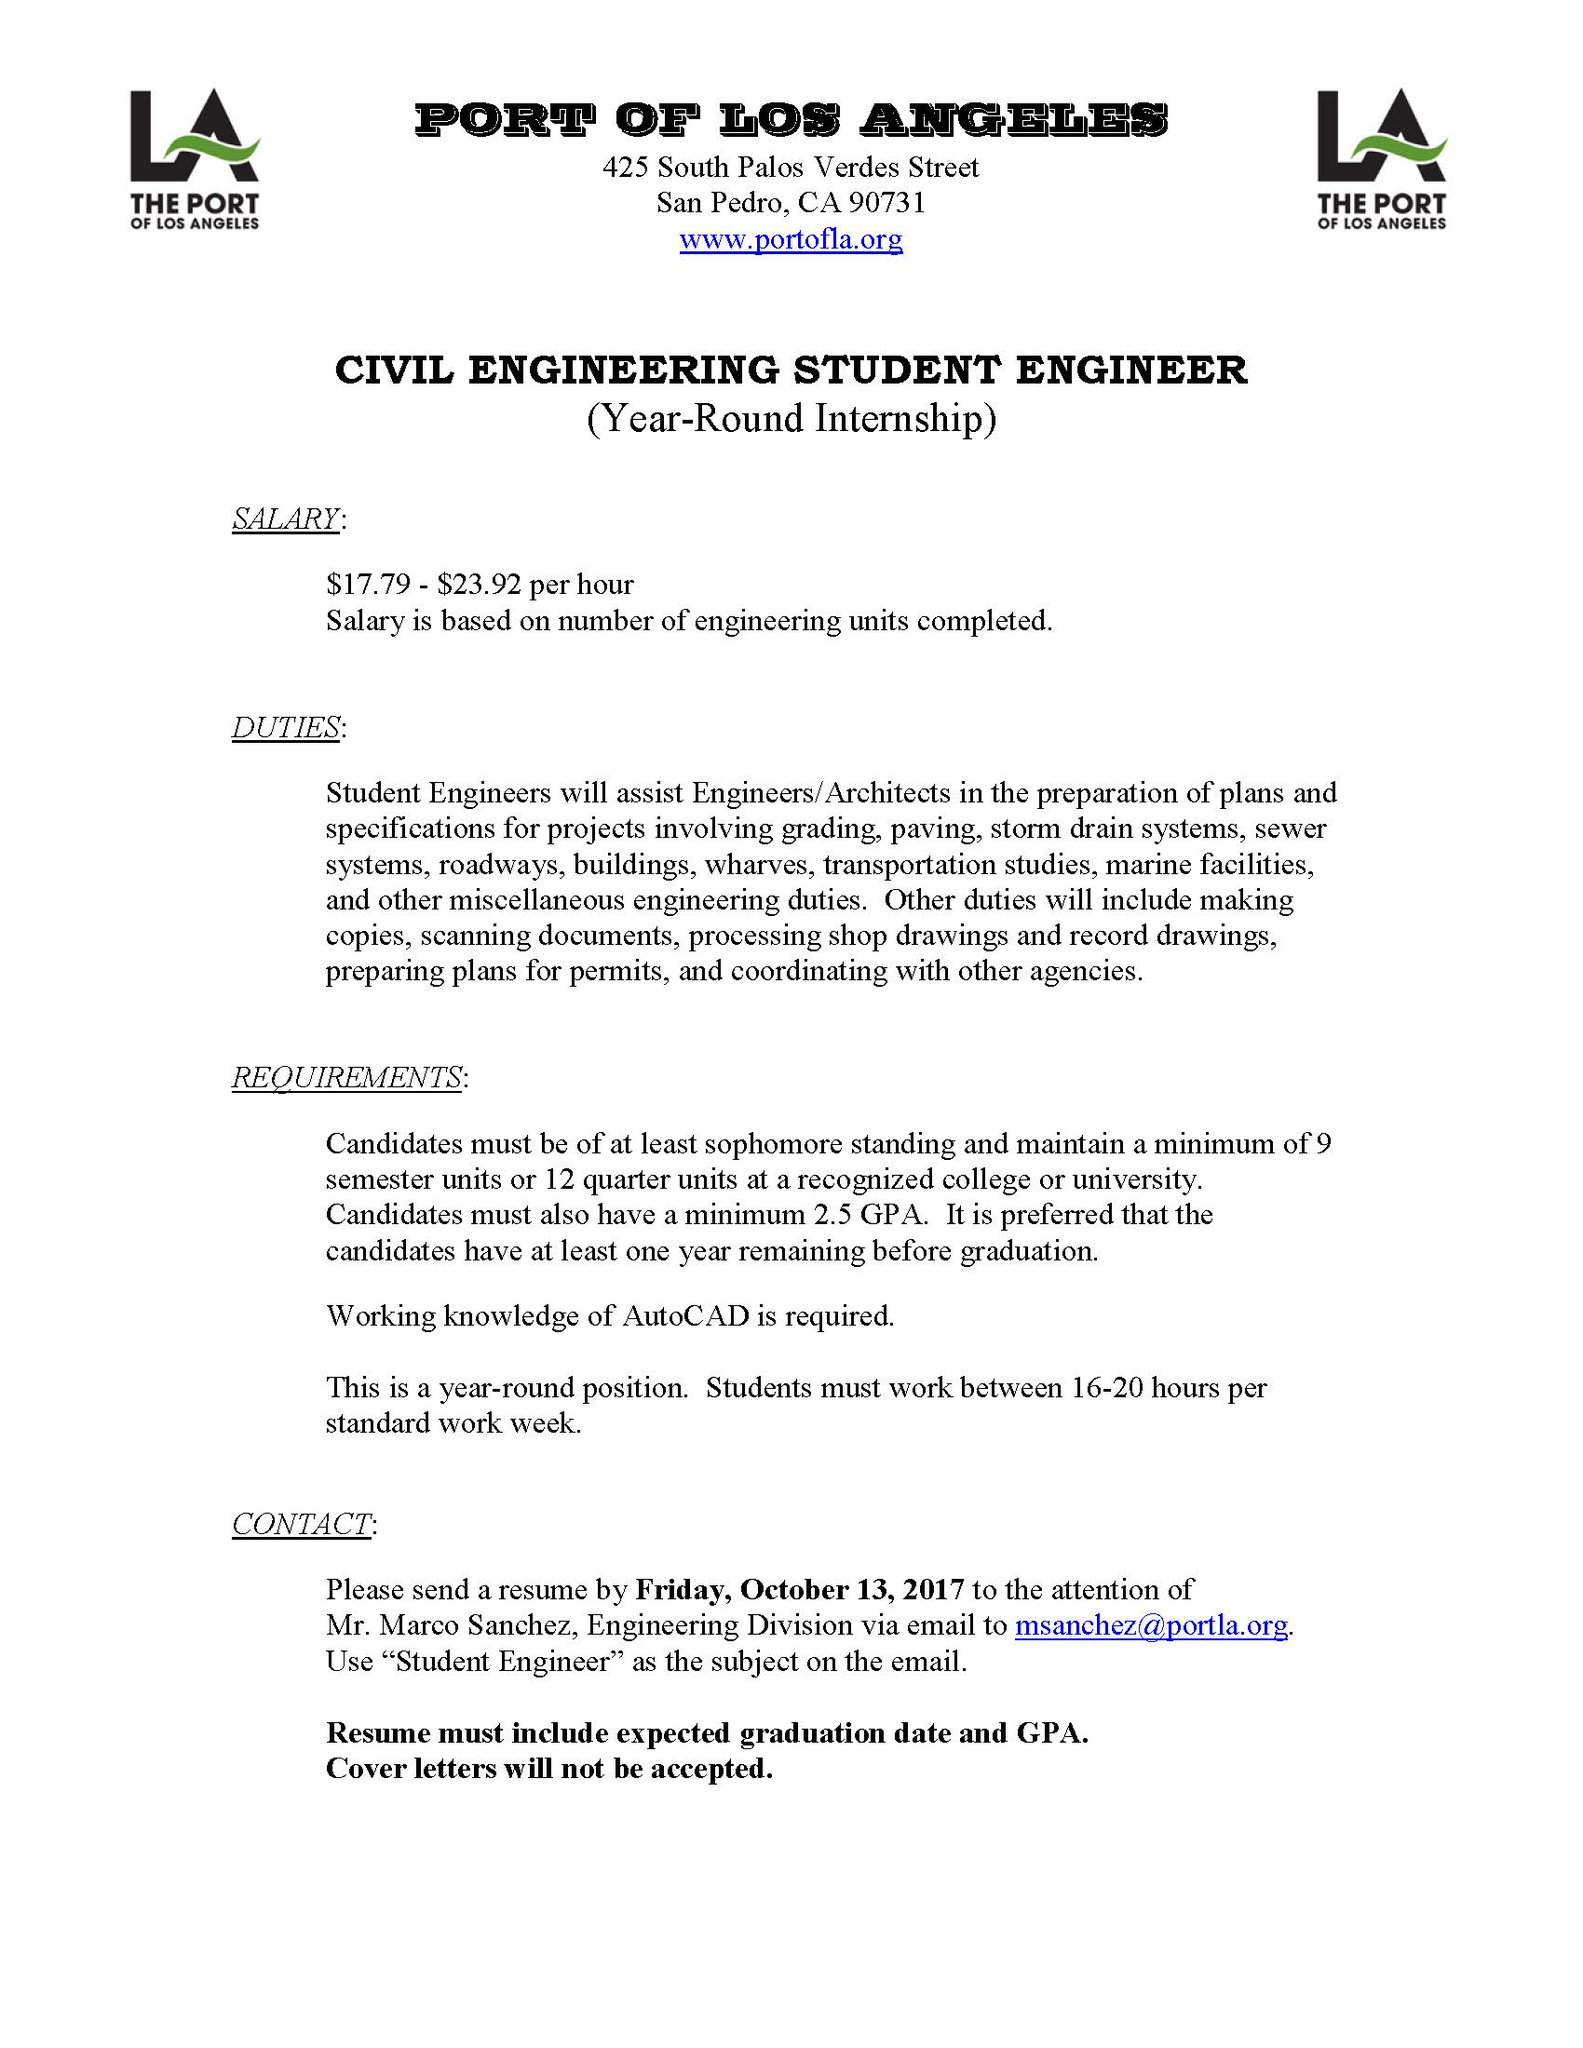 Civil Engineer Cover Letter Sample | Wondershare PDFelement